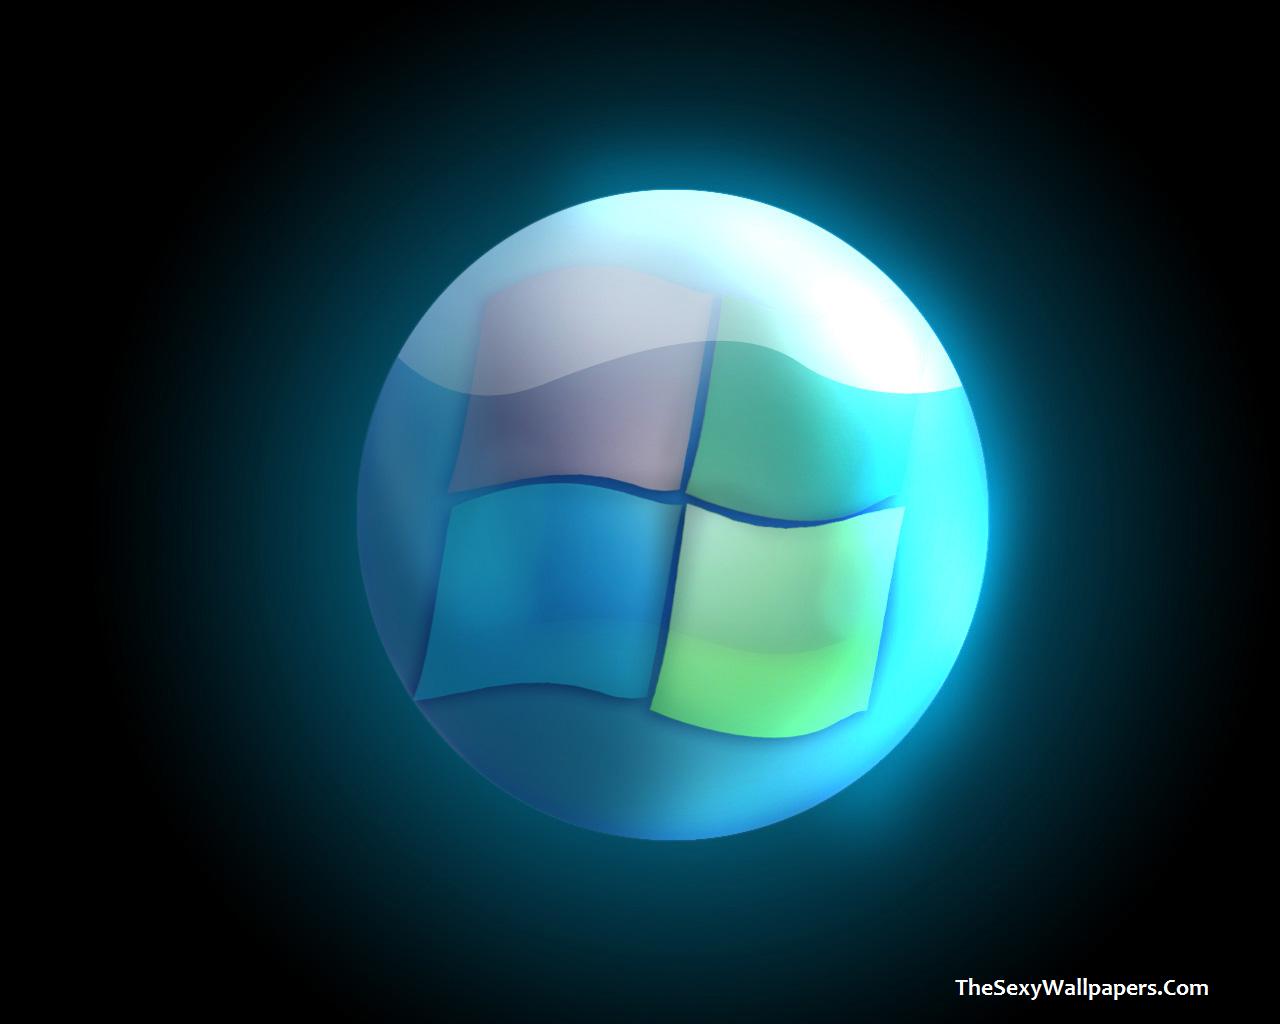 Animated Wallpaper For Windows Vista